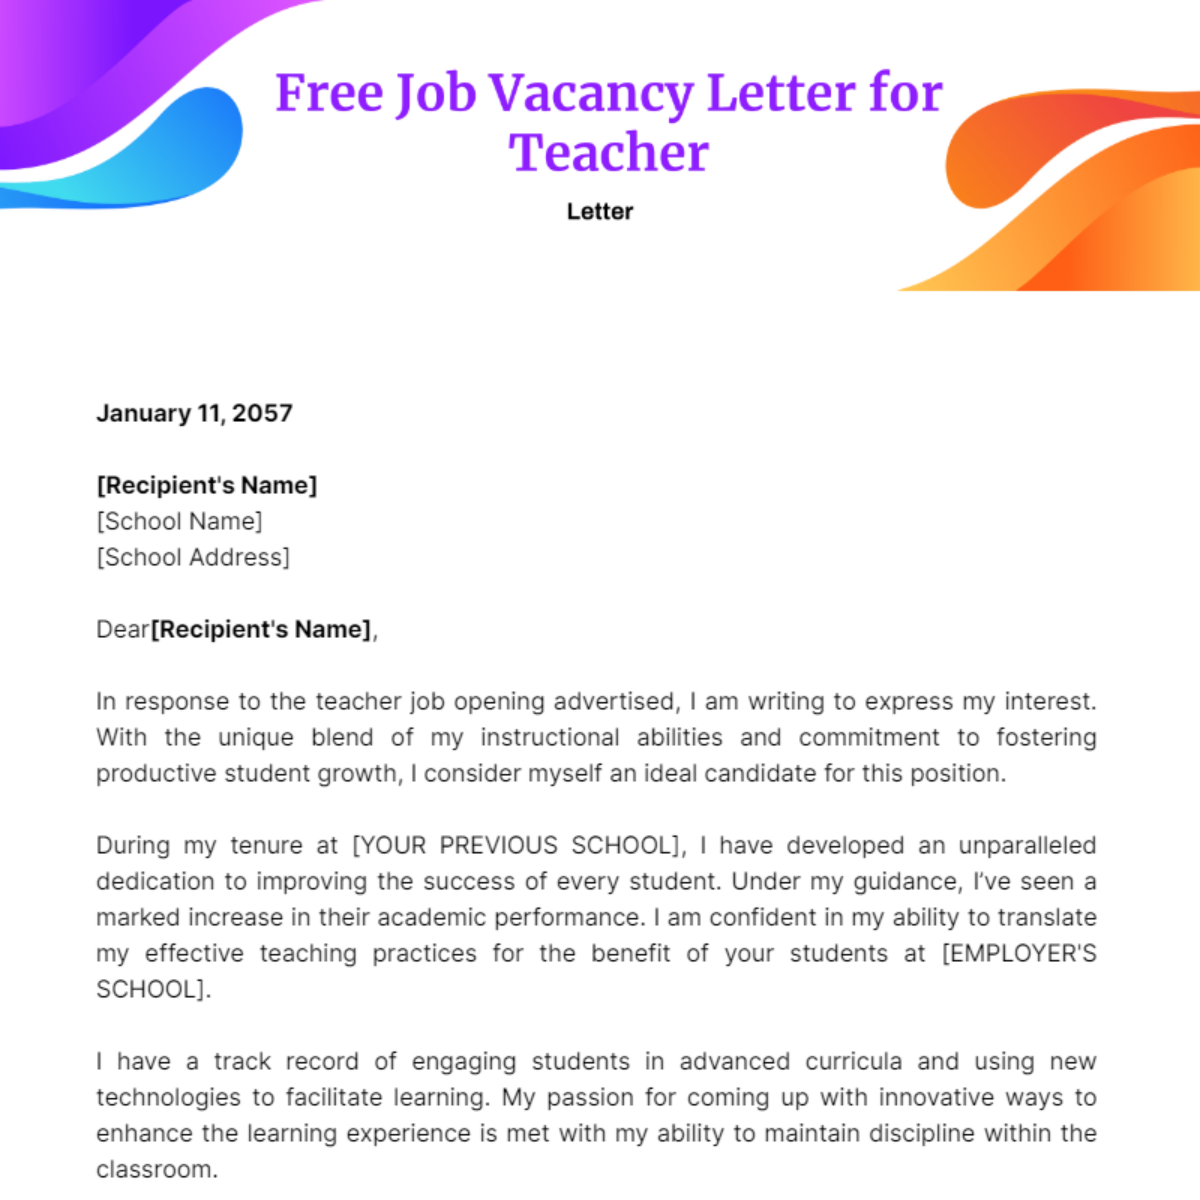 Job Vacancy Letter for Teacher Template